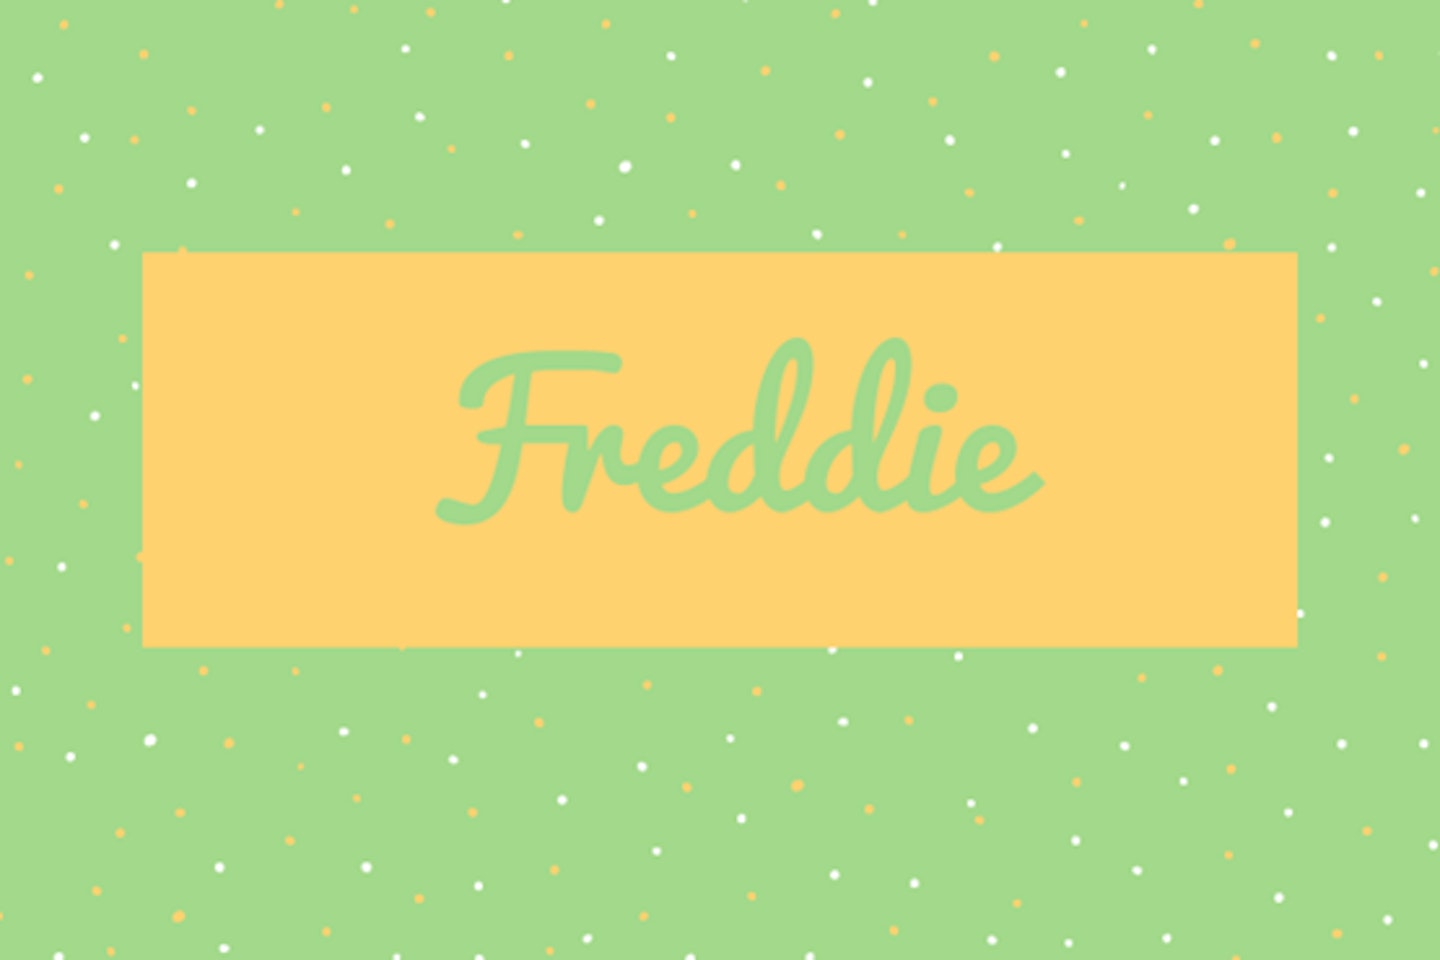 46) Freddie